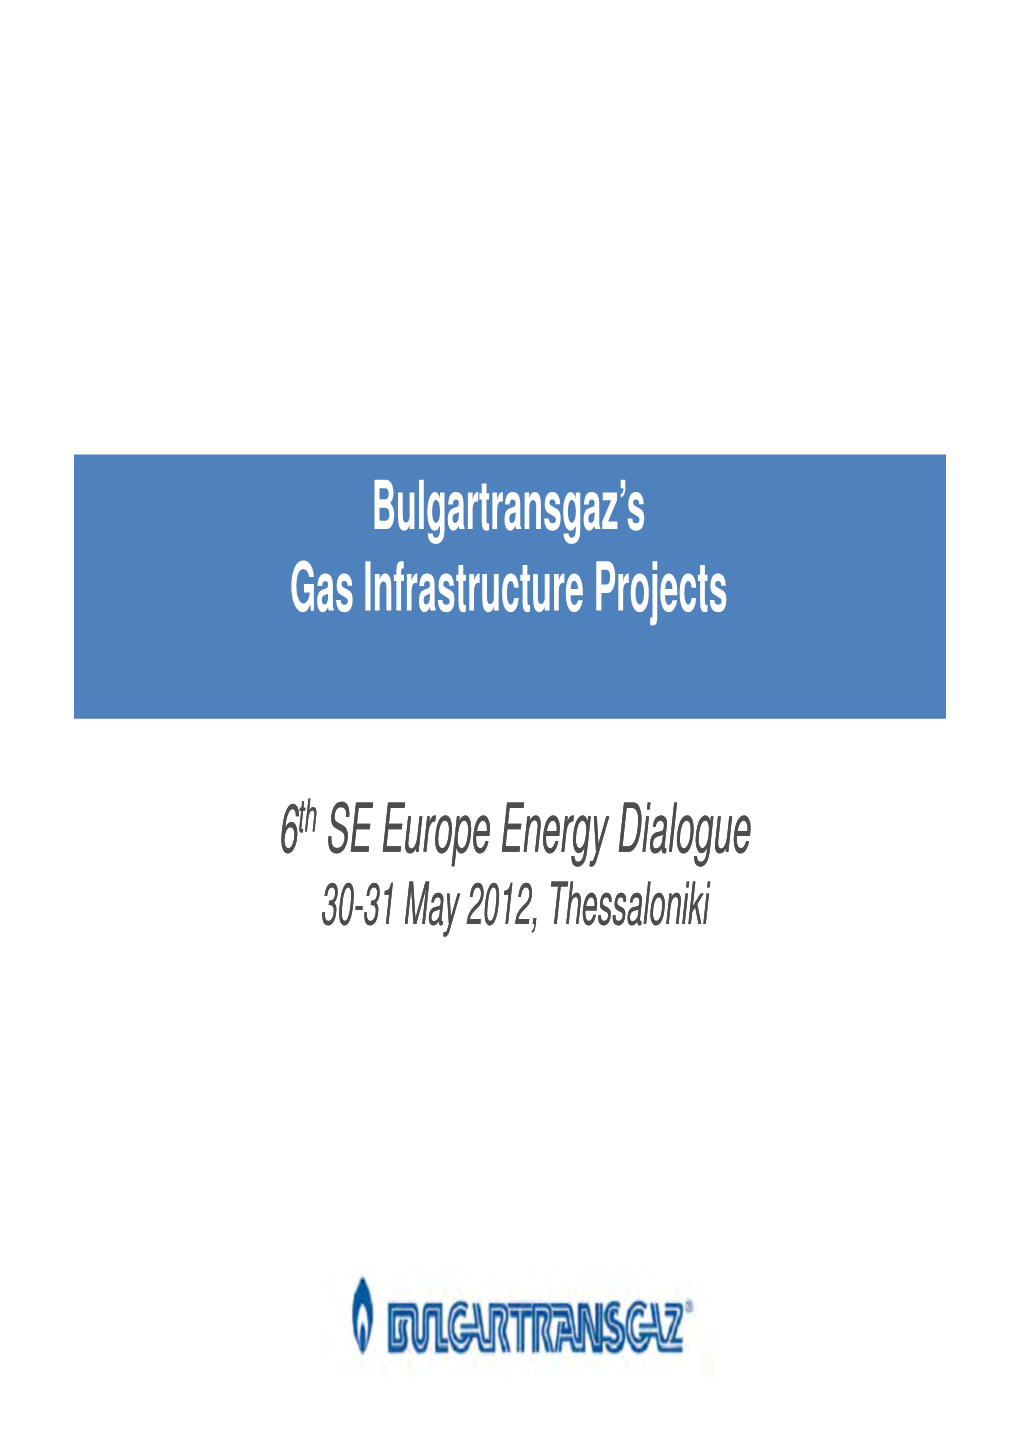 Bulgartransgaz's Gas Infrastructure Projects